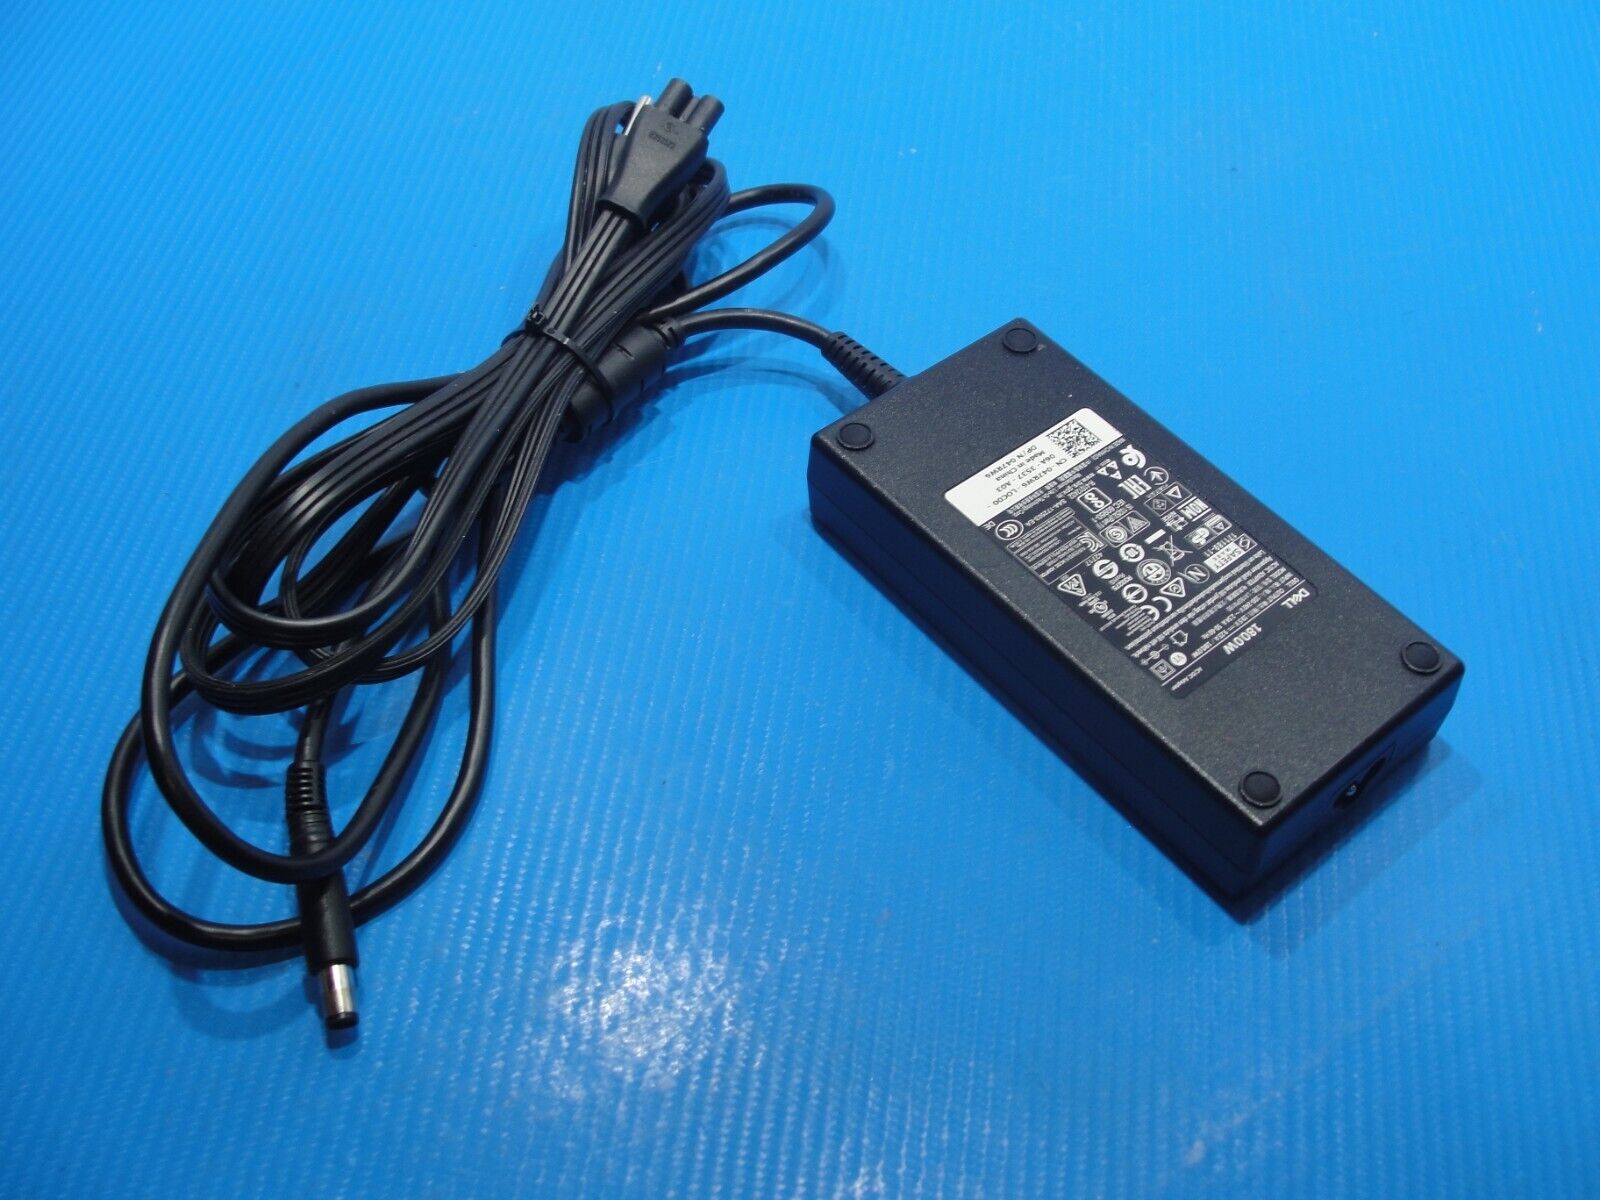 Genuine Dell AC Power Adapter Charger 19.5V 9.23A 180W  LA180PM180  047RW6